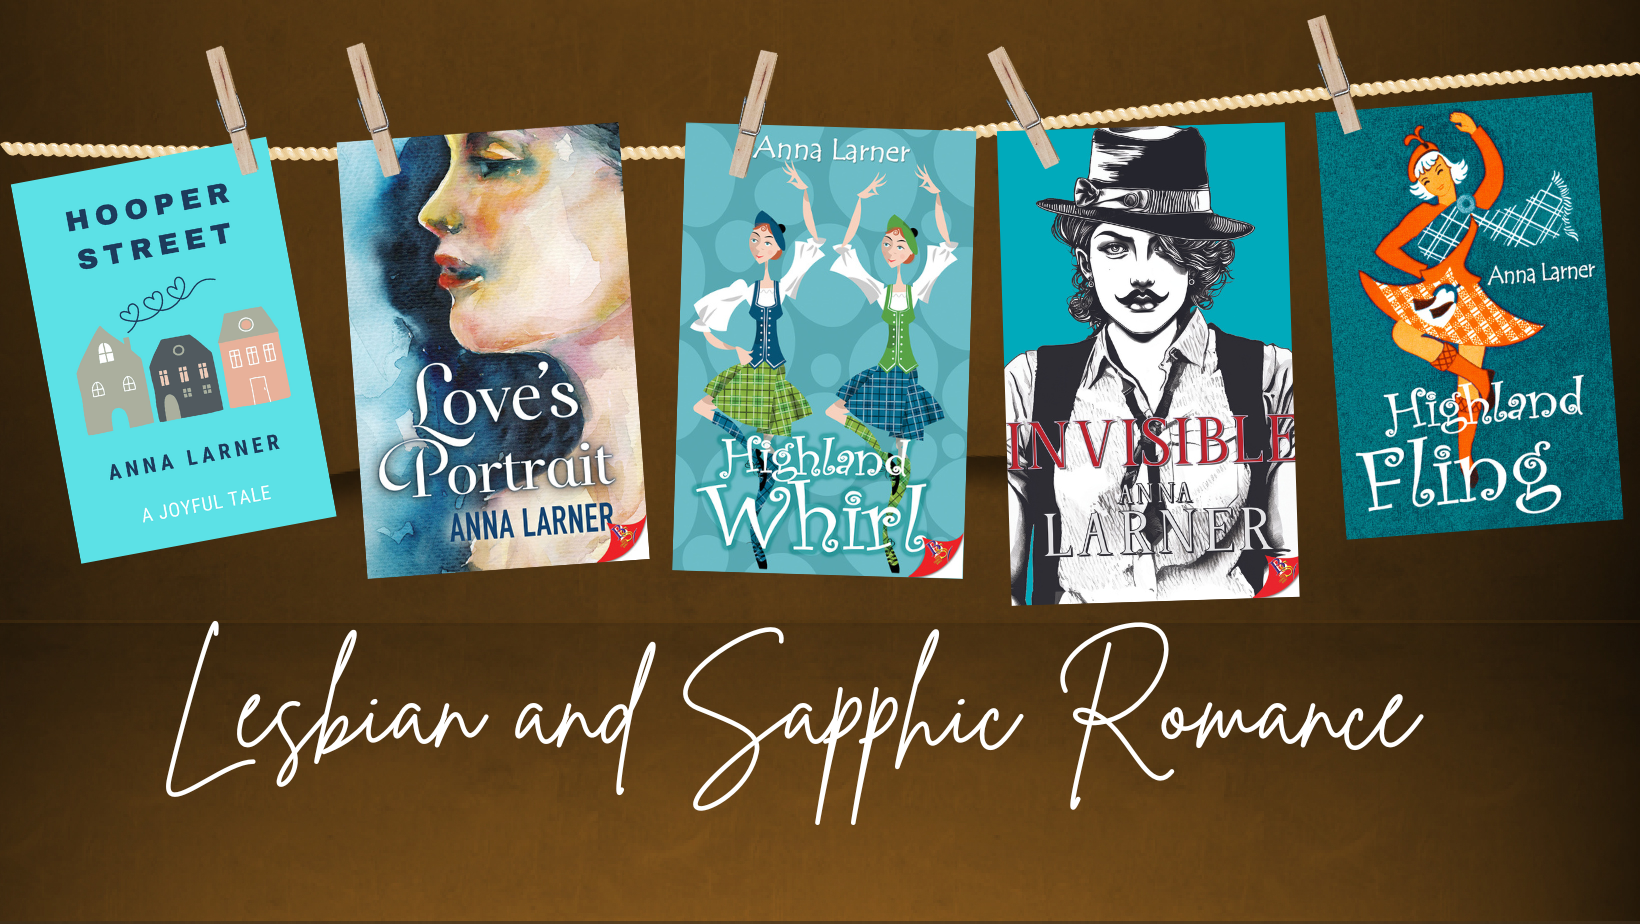 Lesbian-and-Sapphic-Romance-Books by Anna Larner